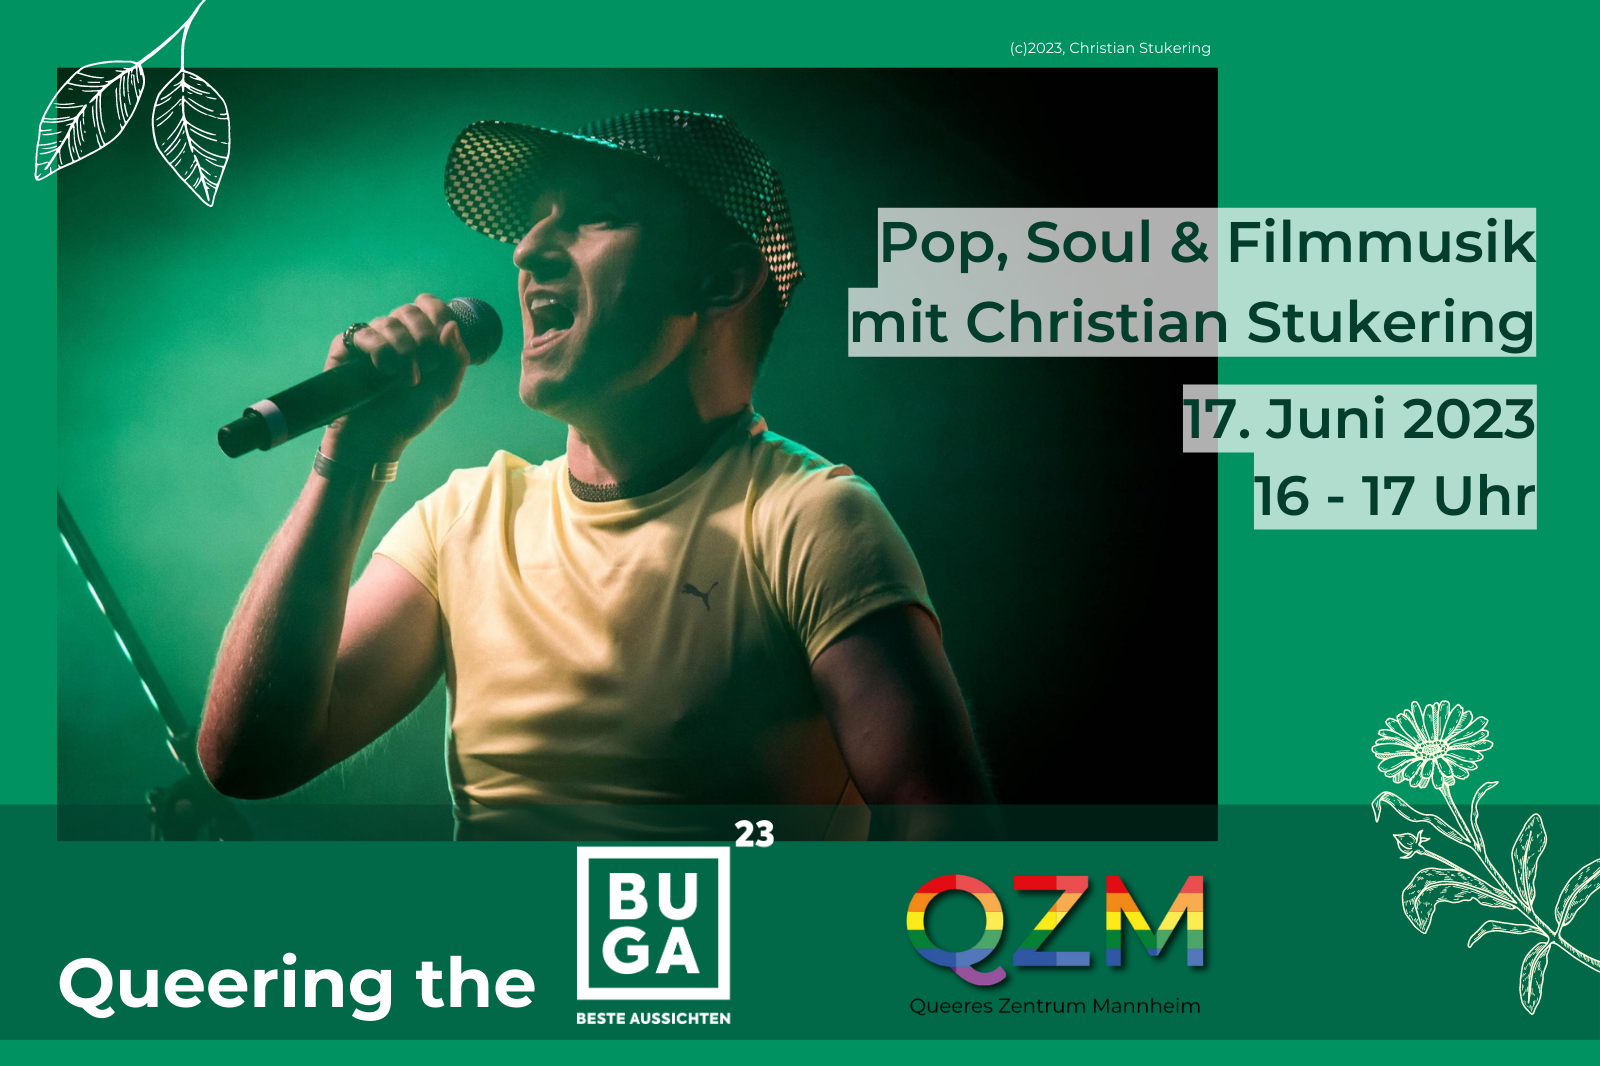 Foto: Christian Stukering, Text: Pop, Soul & Filmmusik mit Christian Stukering, 17. Juni 2023, 16 bis 17 Uhr